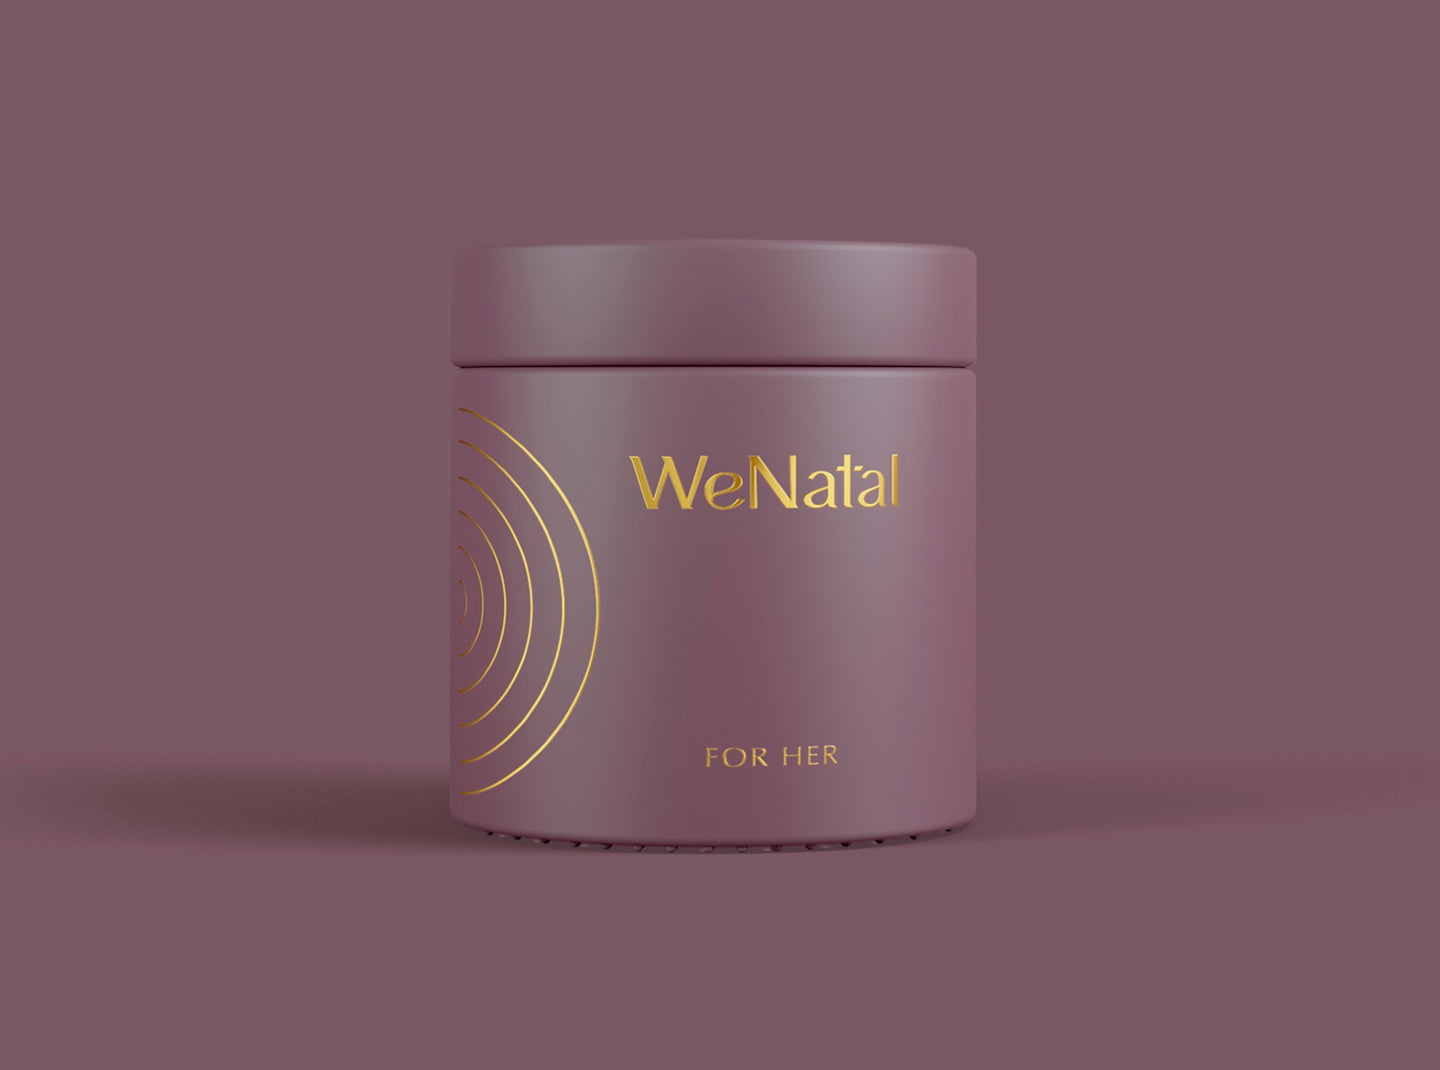 A jar of WeNatal For Her prenatal supplement against purple background